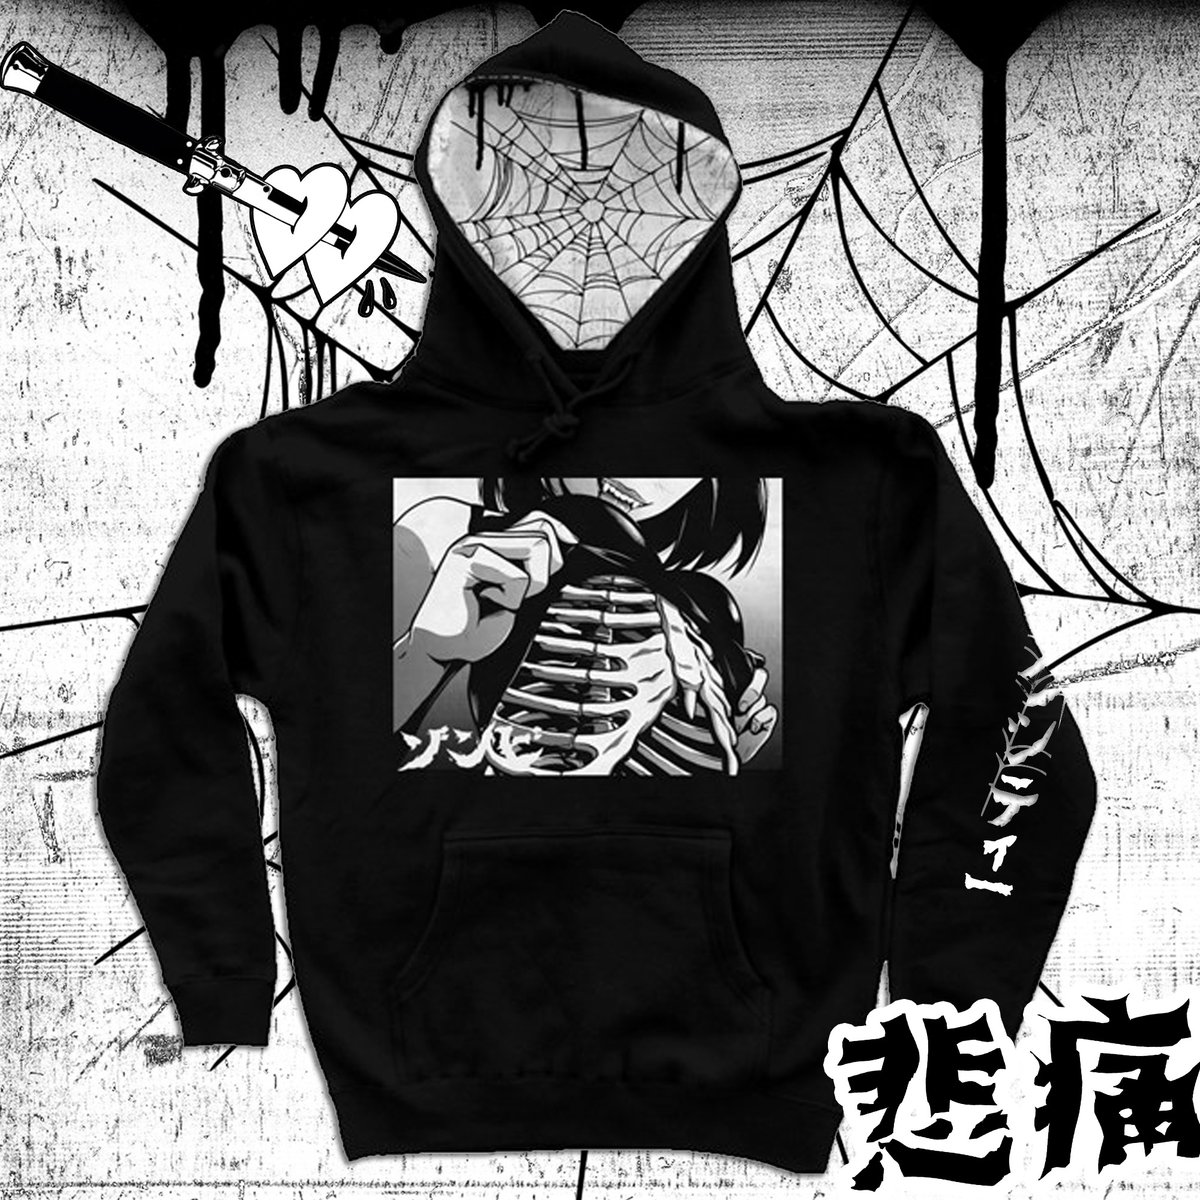 made a lined hoodie version of the old-school design if ya missed it 💀 
.⠀⠀⠀⠀⠀⠀
.⠀⠀⠀⠀⠀⠀
.⠀⠀⠀⠀⠀⠀
.⠀⠀⠀⠀⠀⠀
#zombiemakeoutclub #horror #manga #jfashion #kawaii #aesthetic #grunge #kawaiifashion #punkgirl #japanfashion #japanesestyle #grungegirl #harajukustyle